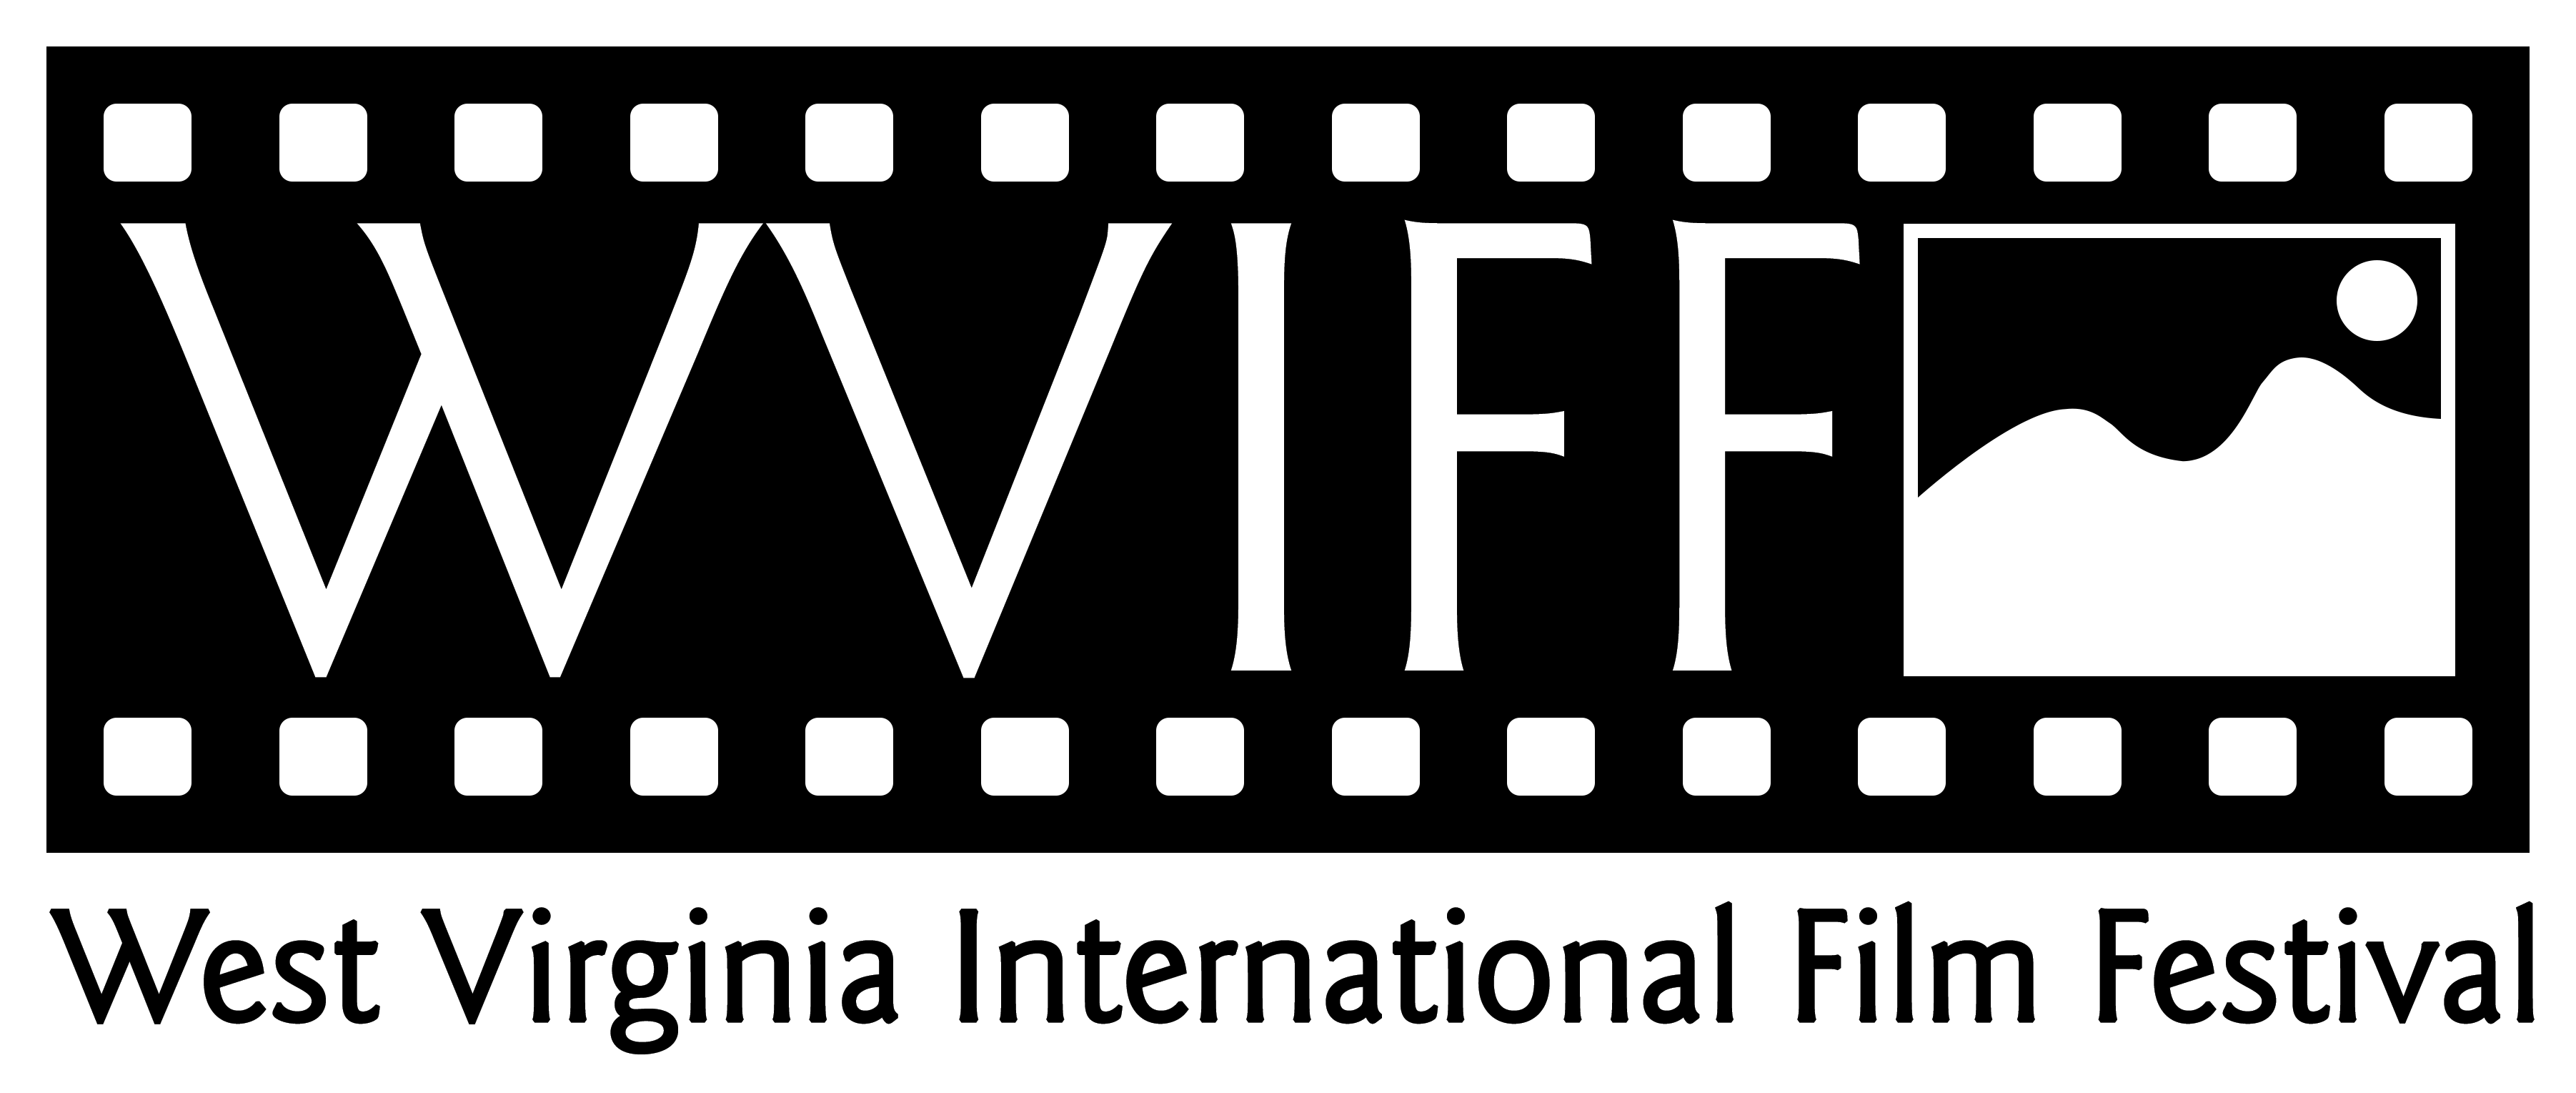 West Virginia International Film Festival